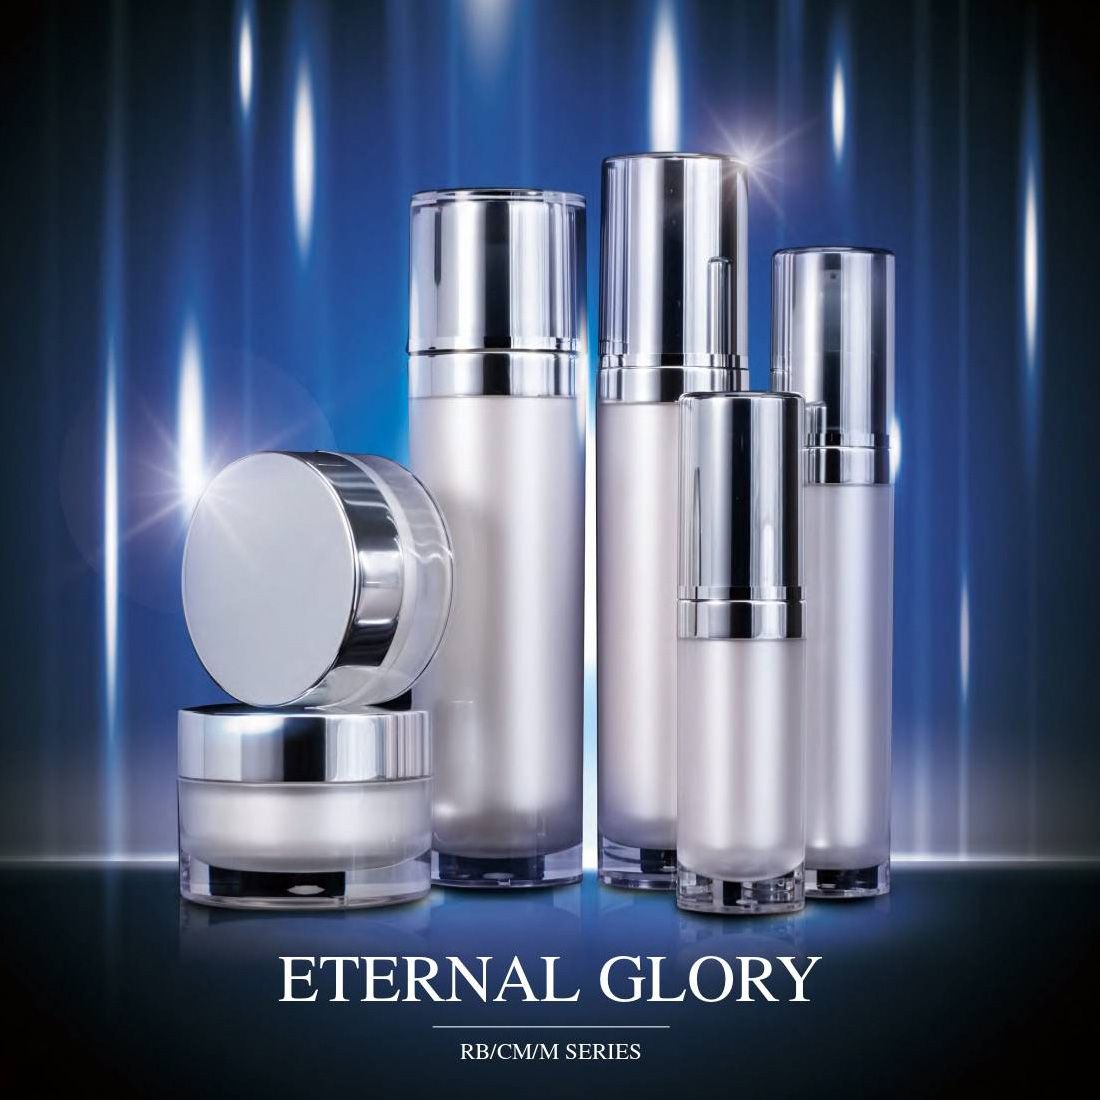 Eternal Glory (Acryl-Luxus-Kosmetik- und Hautpflegeverpackung) RB-/CM-/M-Serie